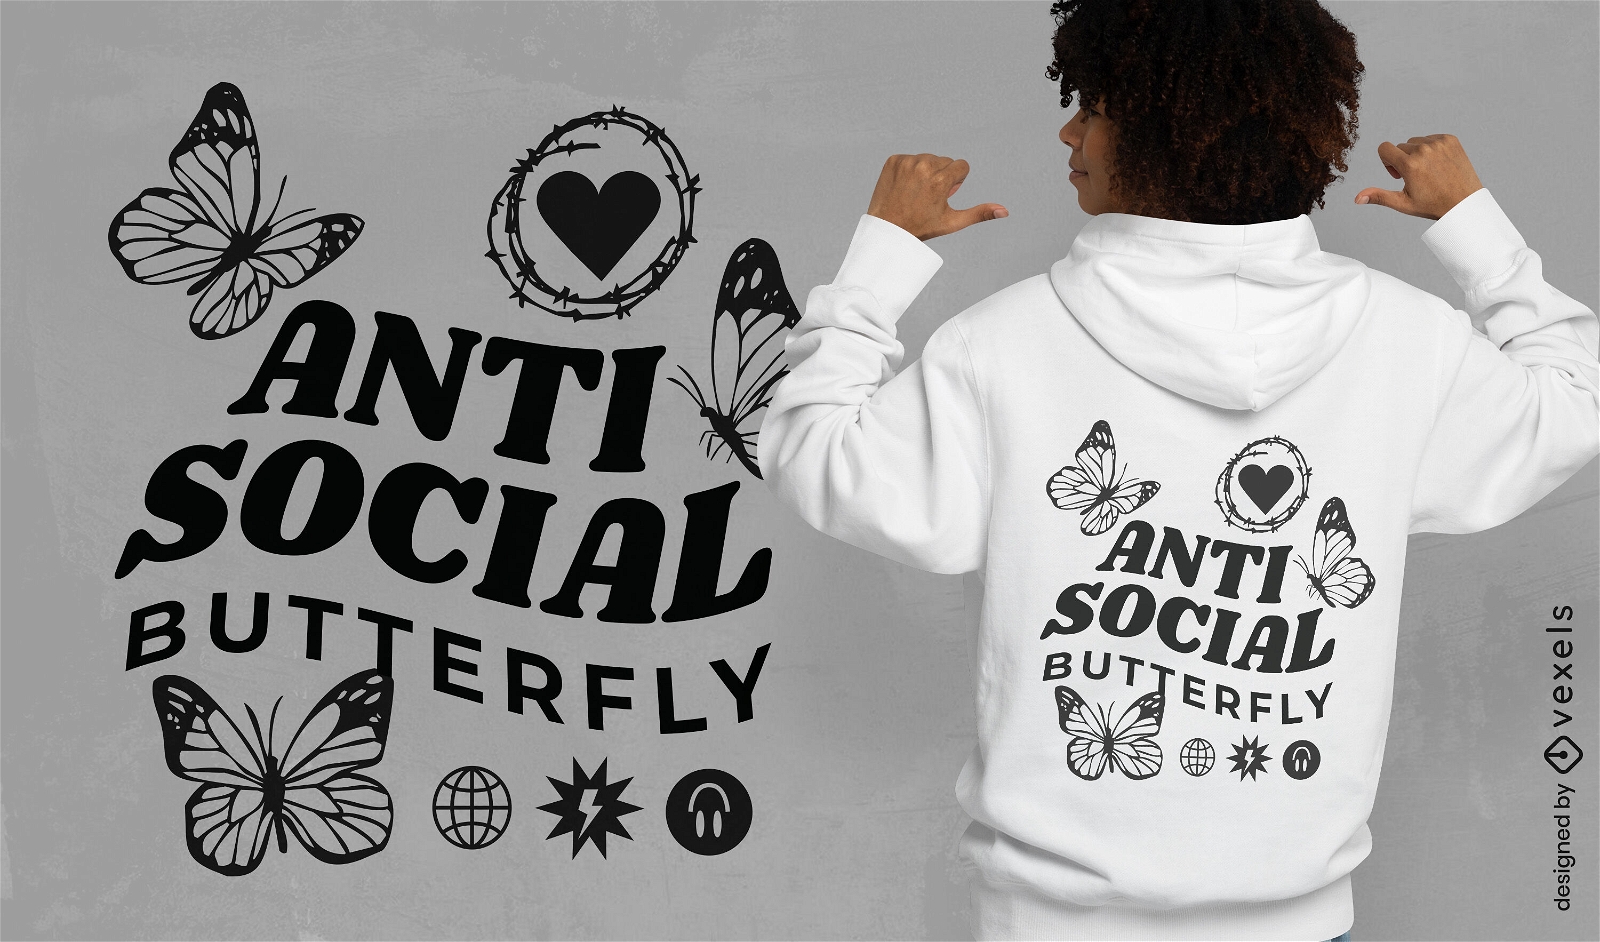 Anti social butterfly t-shirt design